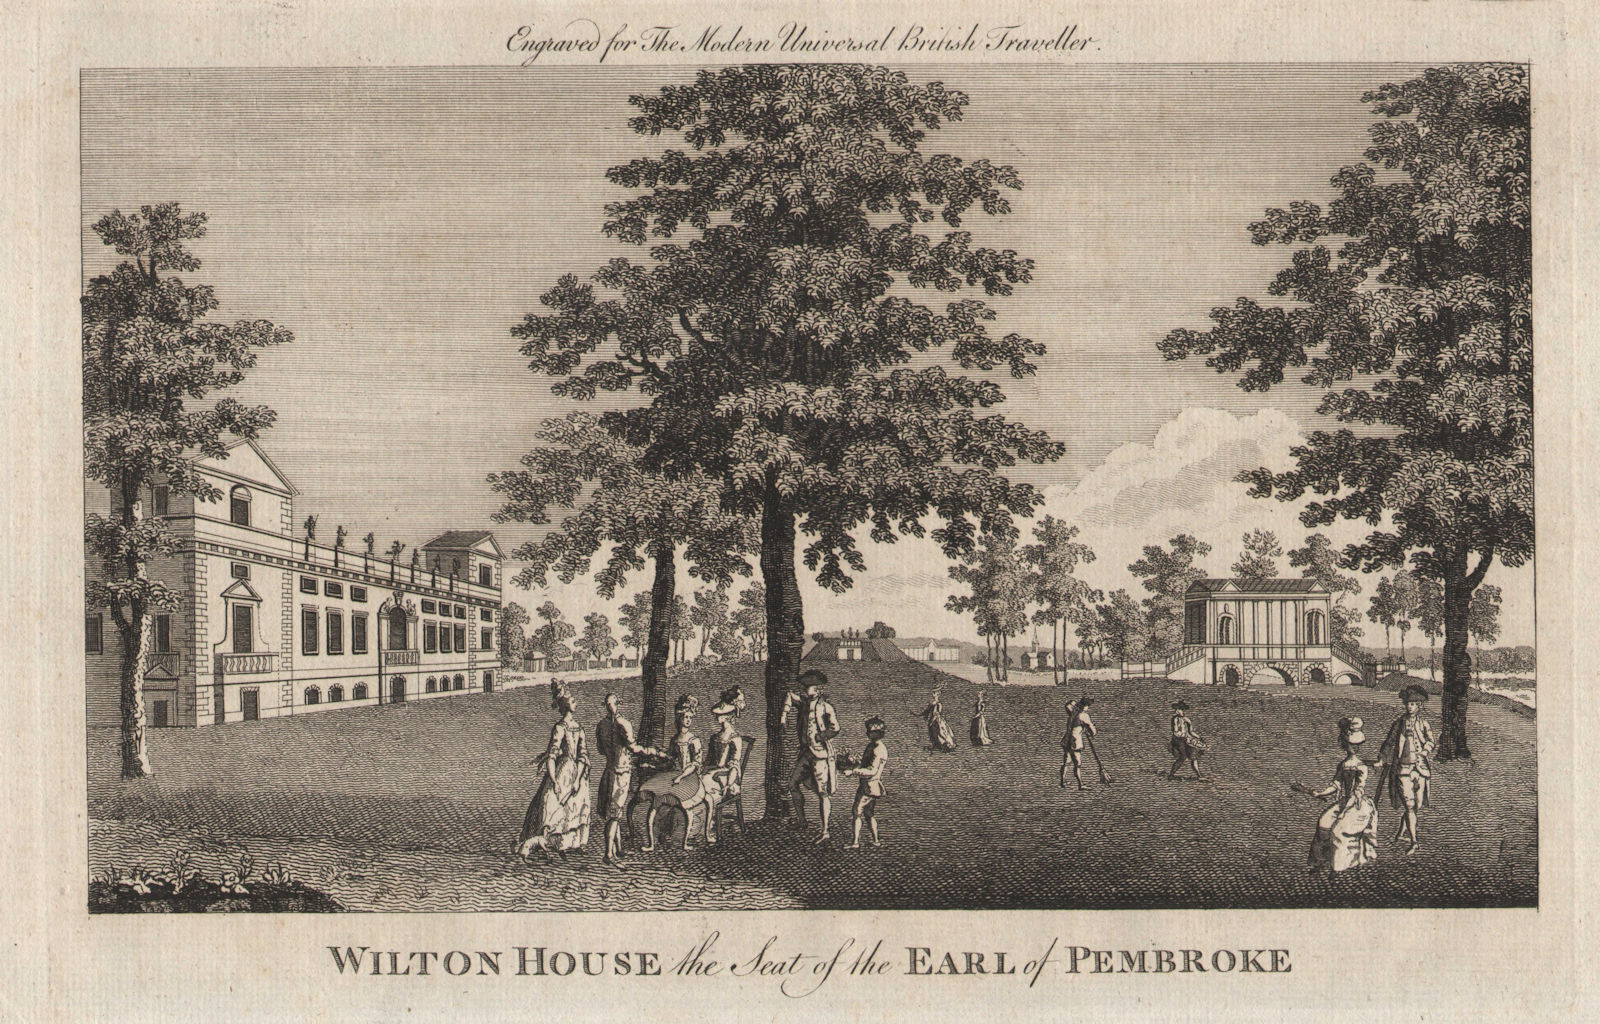 Wilton House, seat of the Earl of Pembroke. Salisbury, Wiltshire BURLINGTON 1779